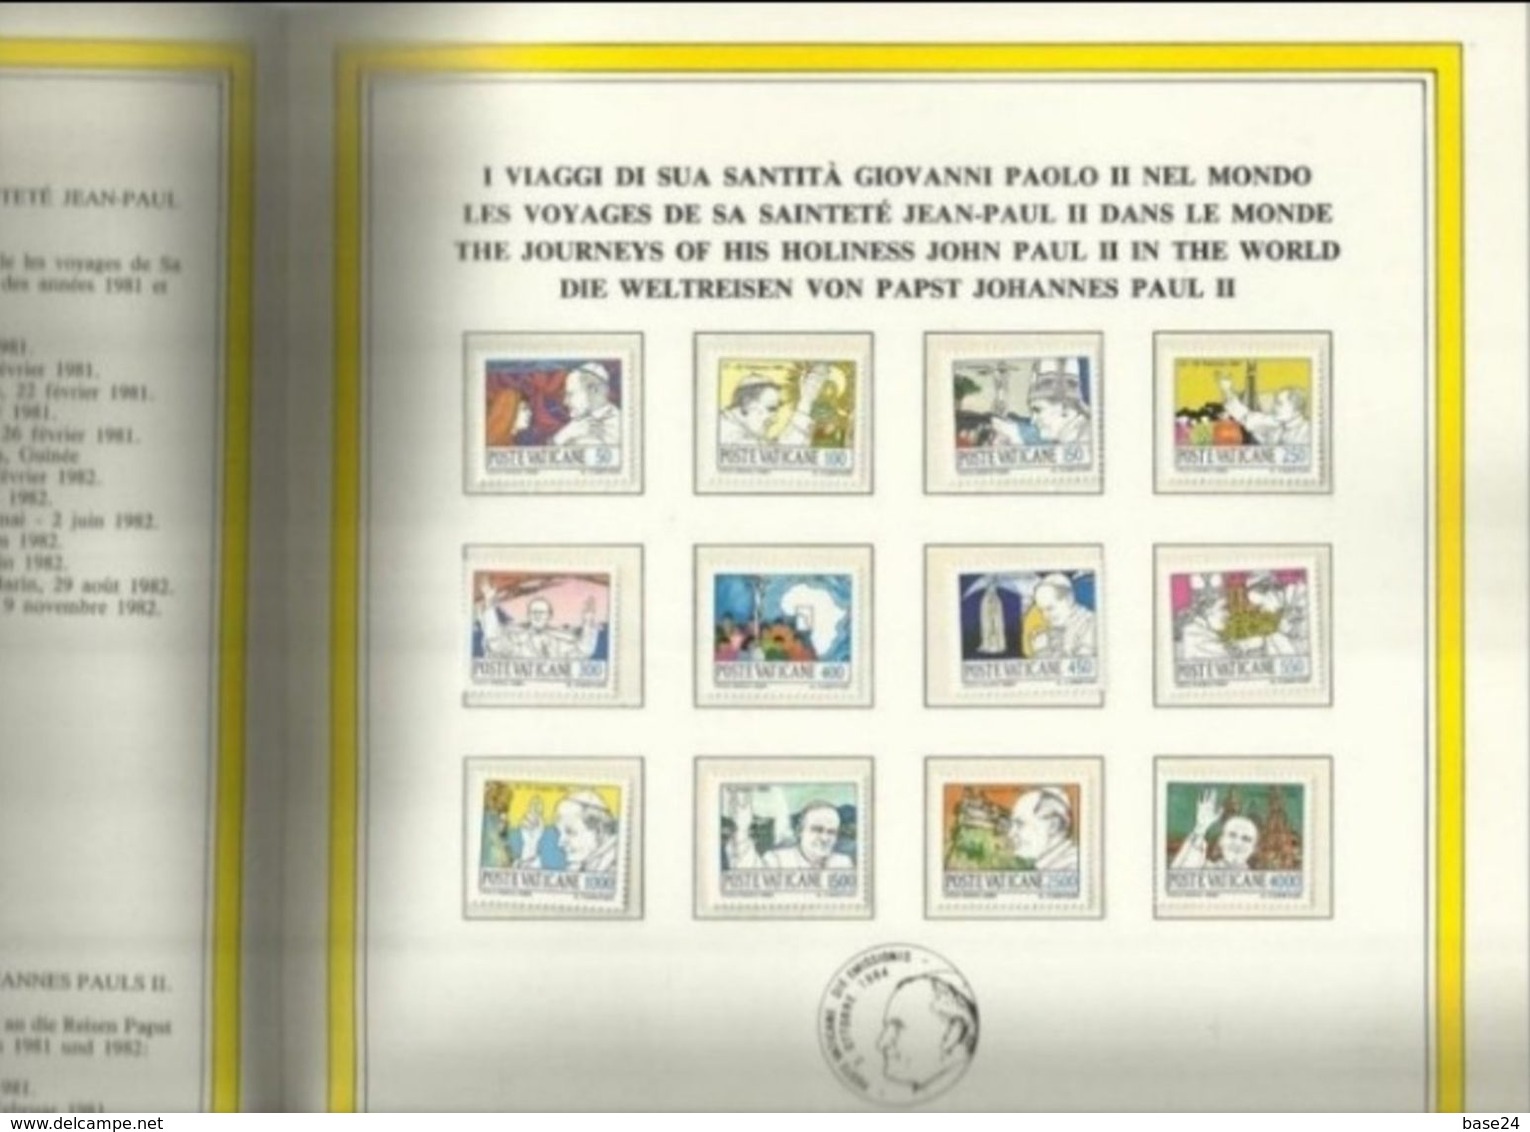 1984 Vaticano Vatican LIBRO UFFICIALE VATICANO 1984 - BOOK 1984 - Errors & Oddities